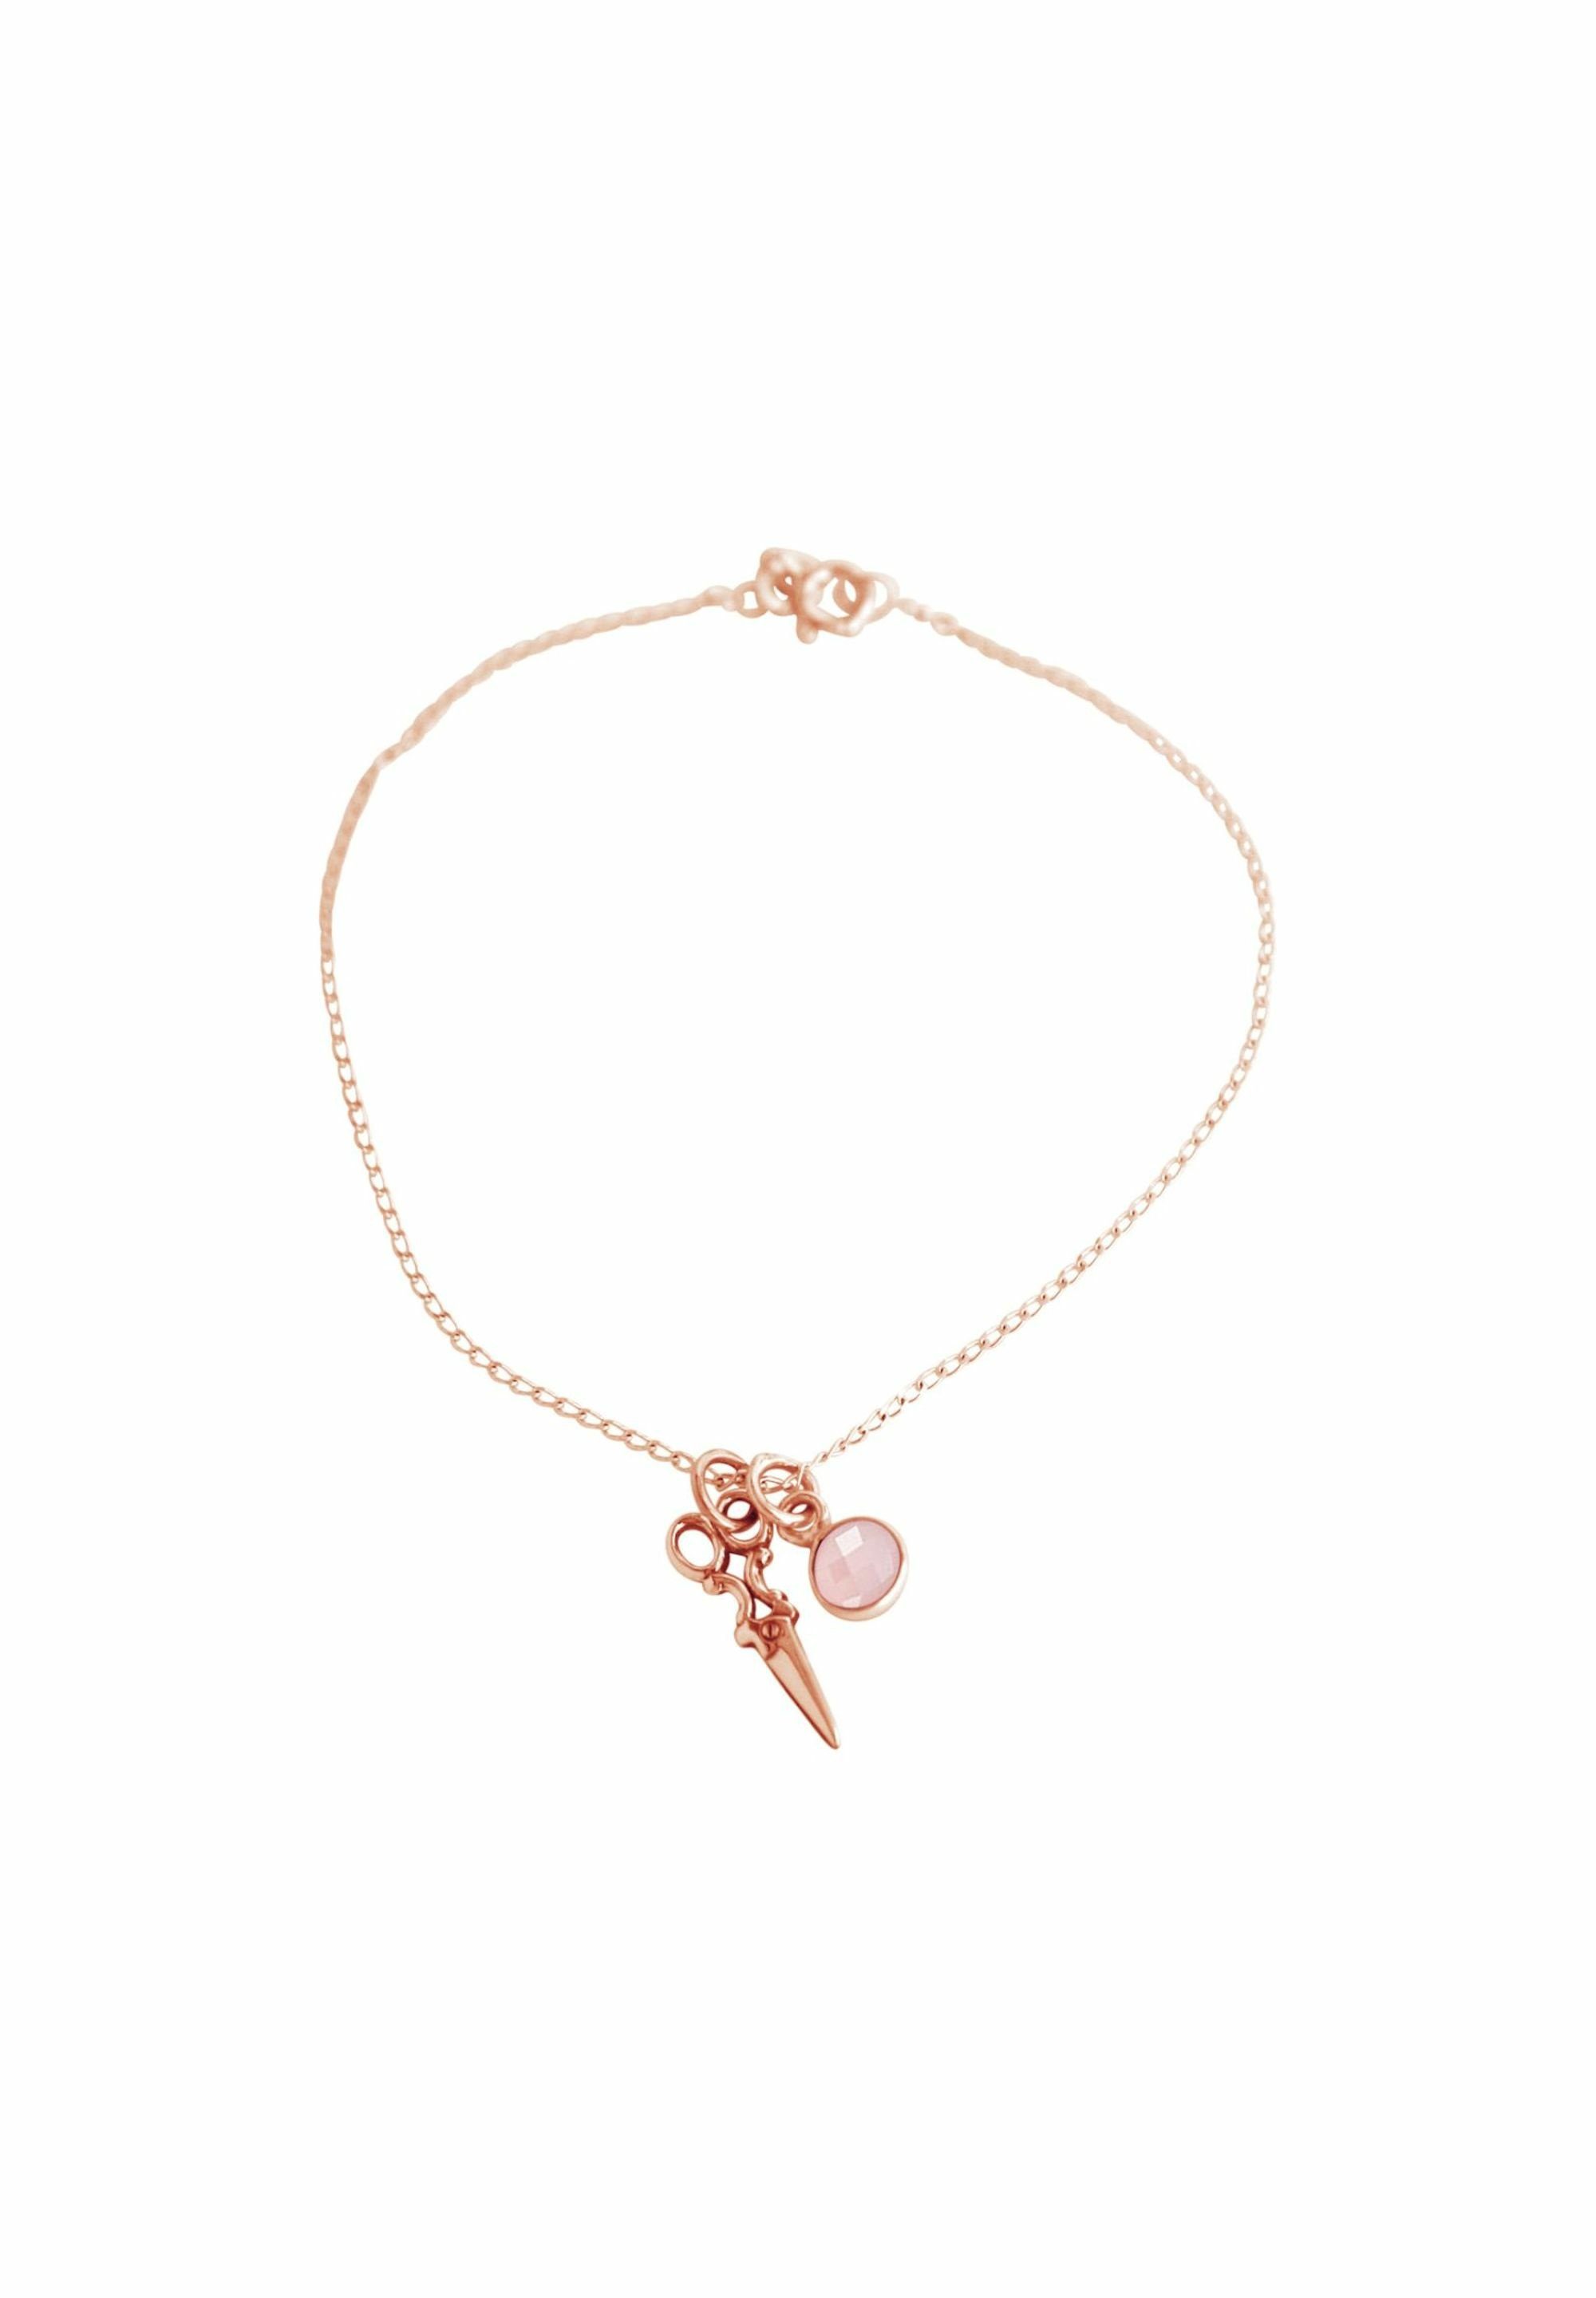 Gemshine Armband Schere und Rosenquarz rose gold coloured